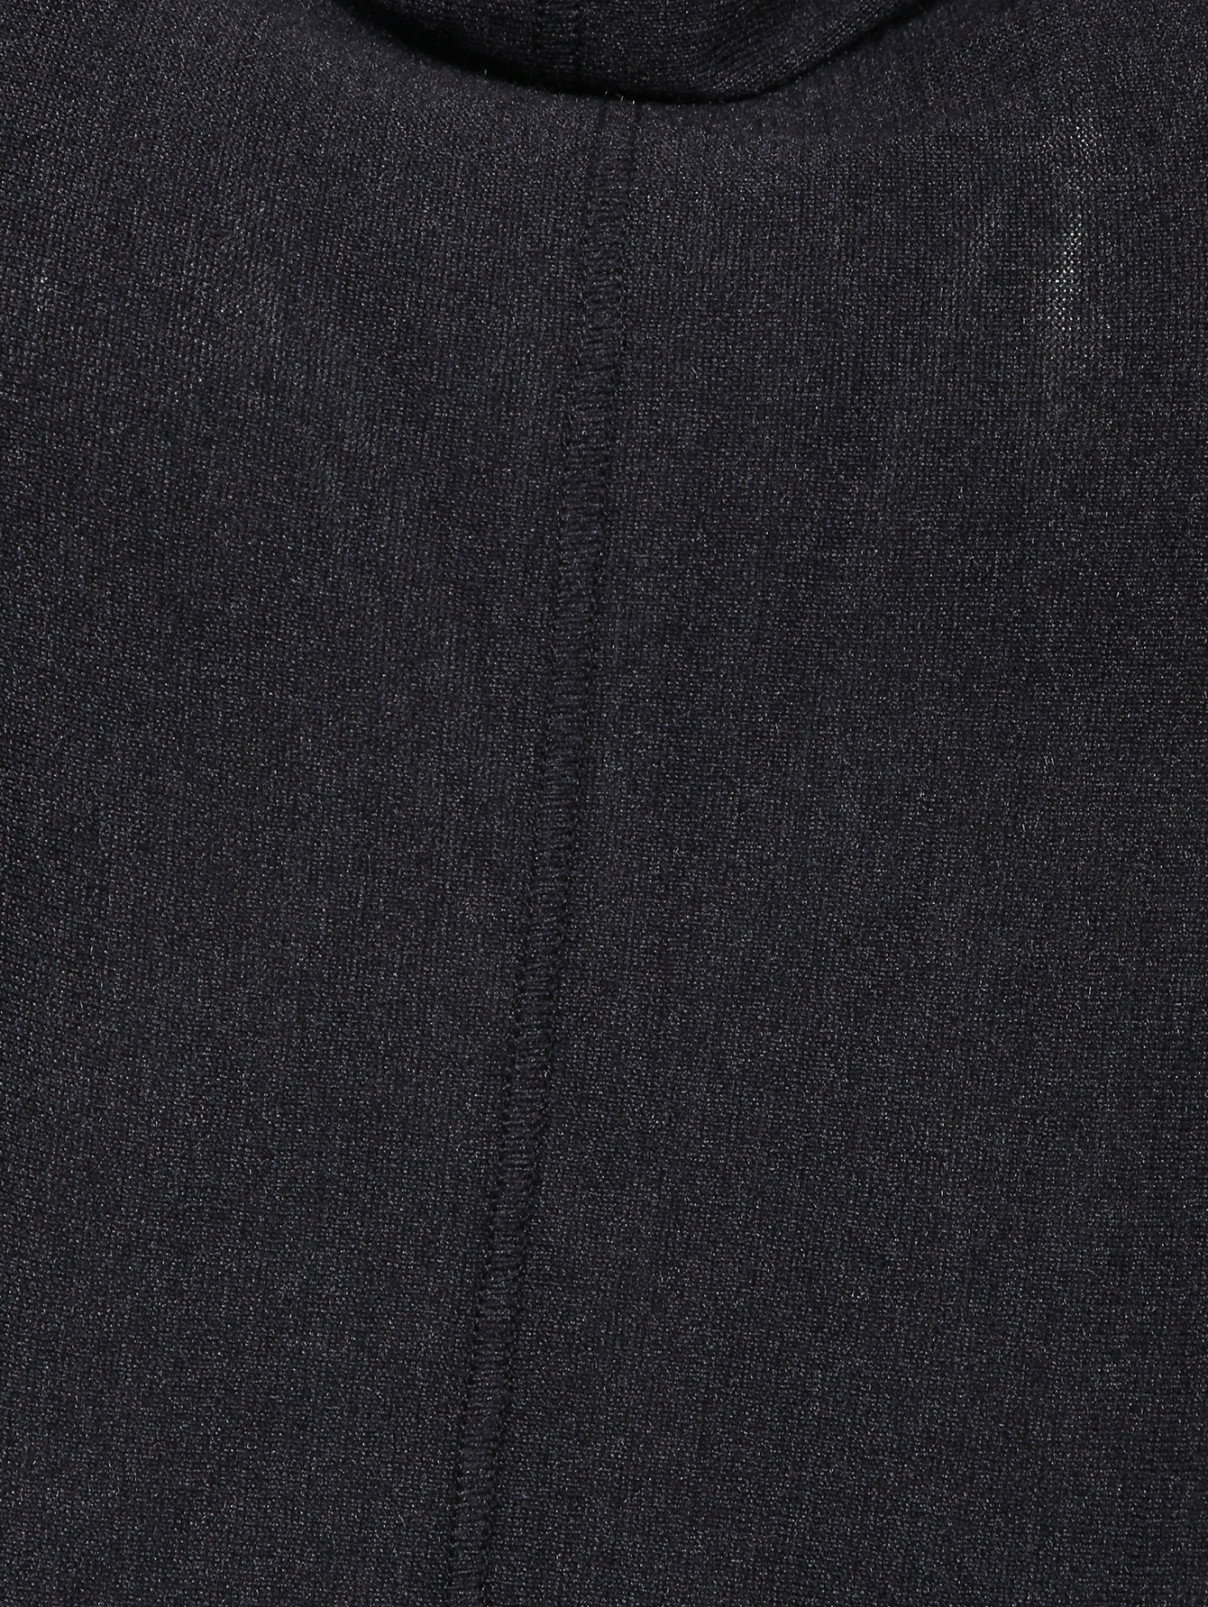 Джемпер из шелка Marina Rinaldi  –  Деталь1  – Цвет:  Серый